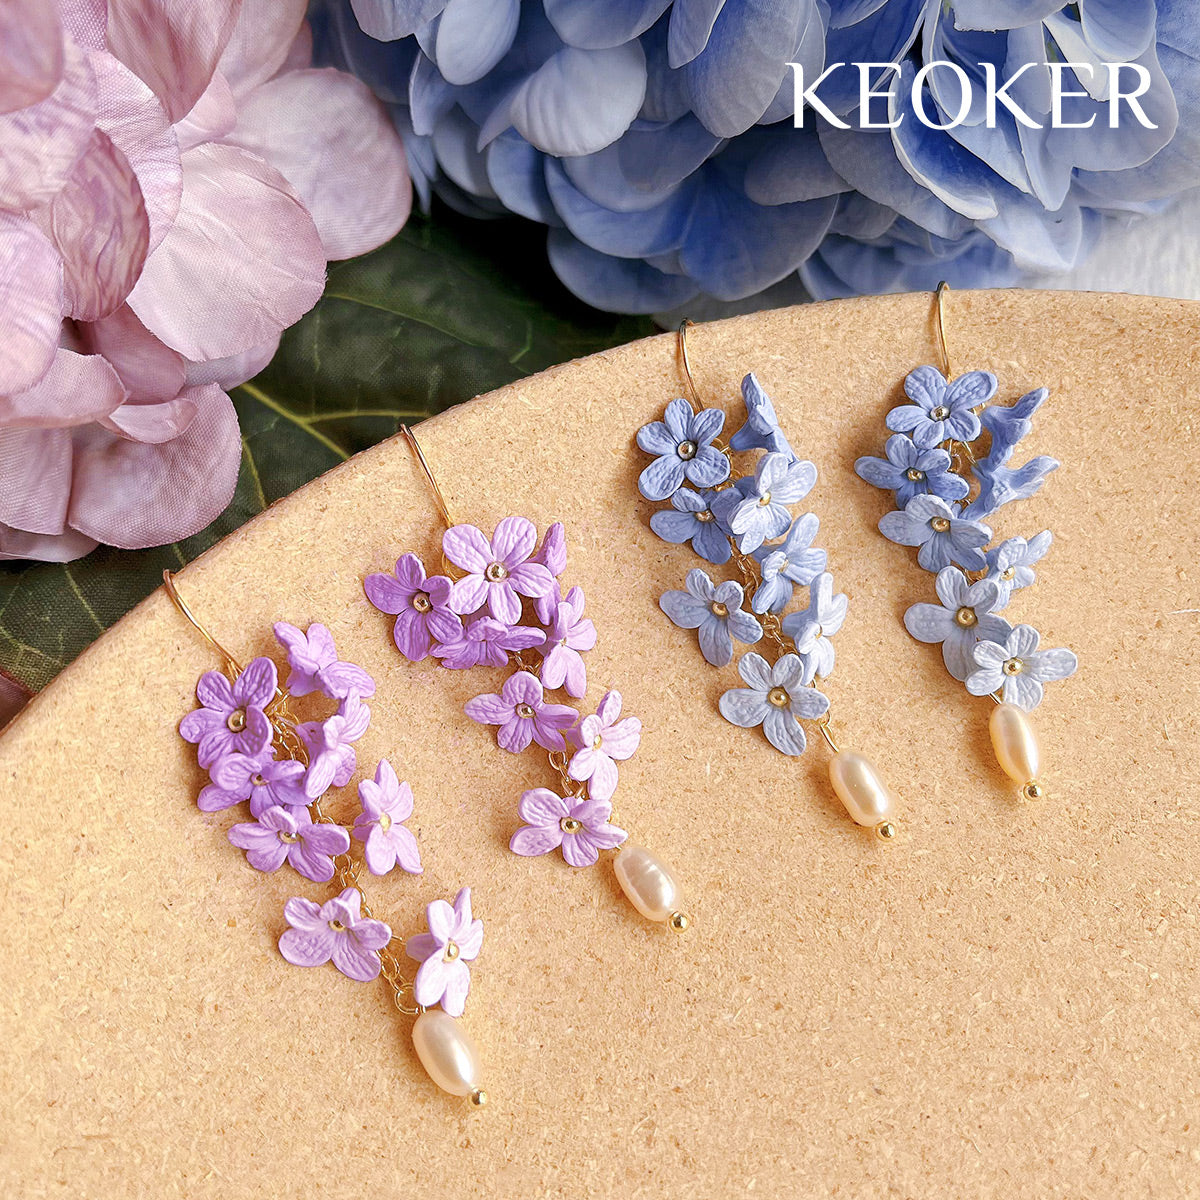 KEOKER Flower Polymer Clay Molds(6 Pcs)